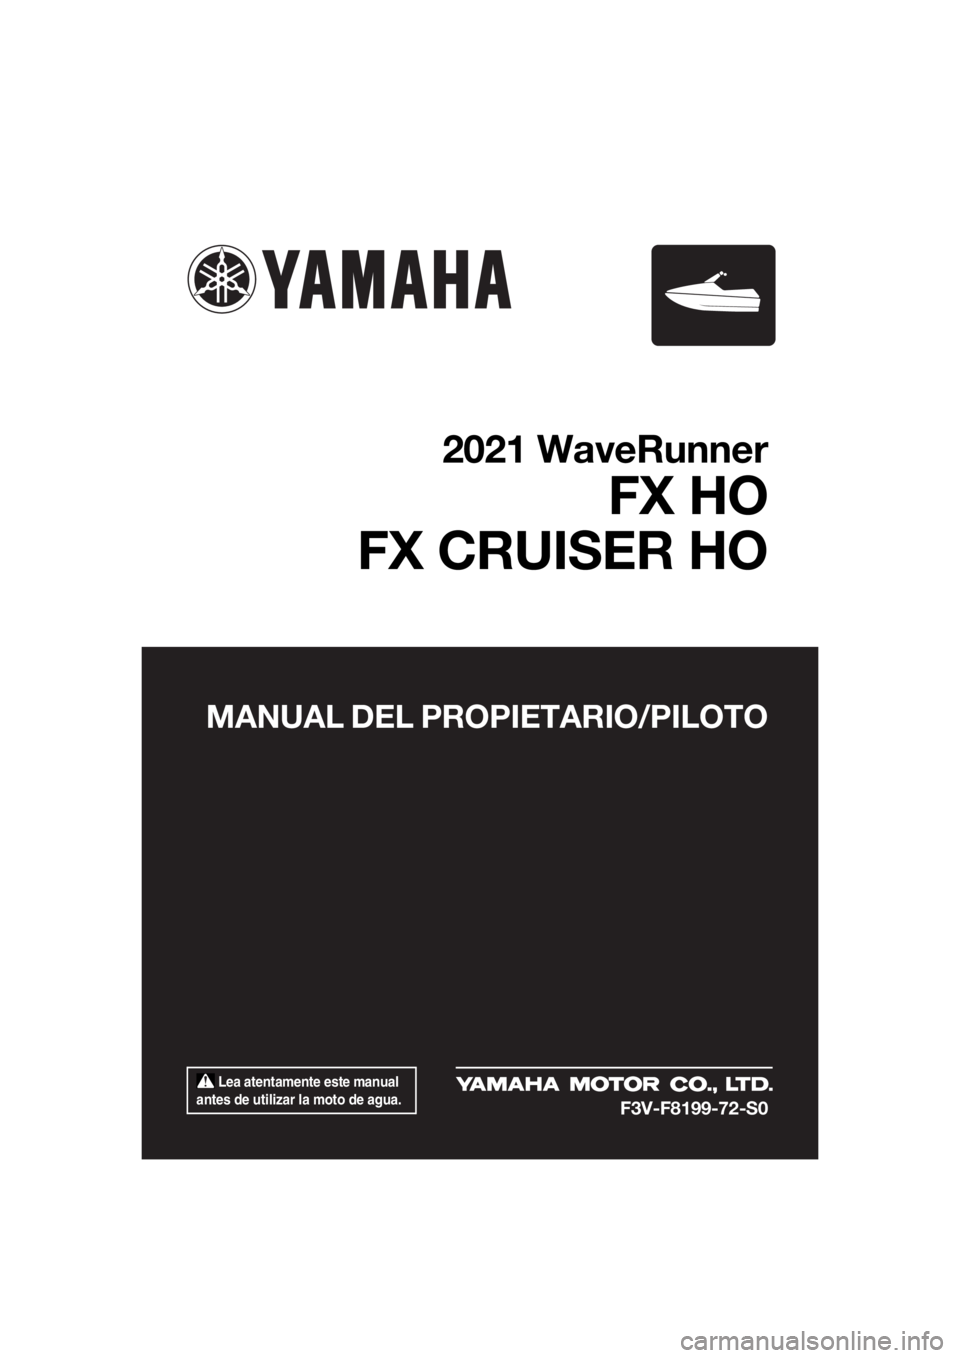 YAMAHA FX HO CRUISER 2021  Manuale de Empleo (in Spanish) 